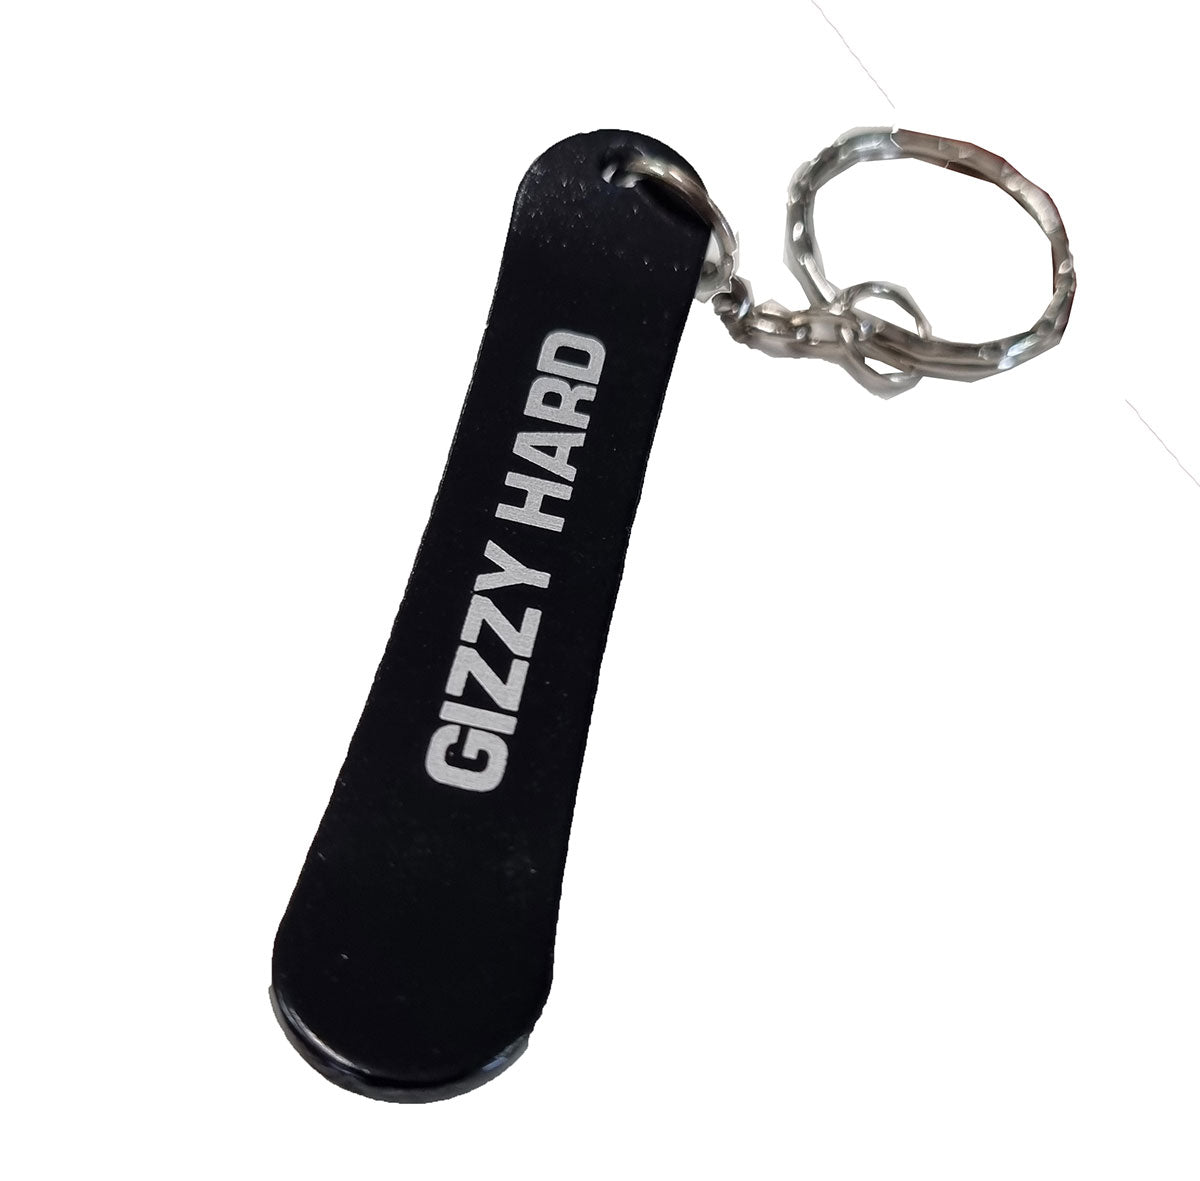 Gizzy Hard Stainless Steel Skateboard Bottle Opener Keyring in black showing deck